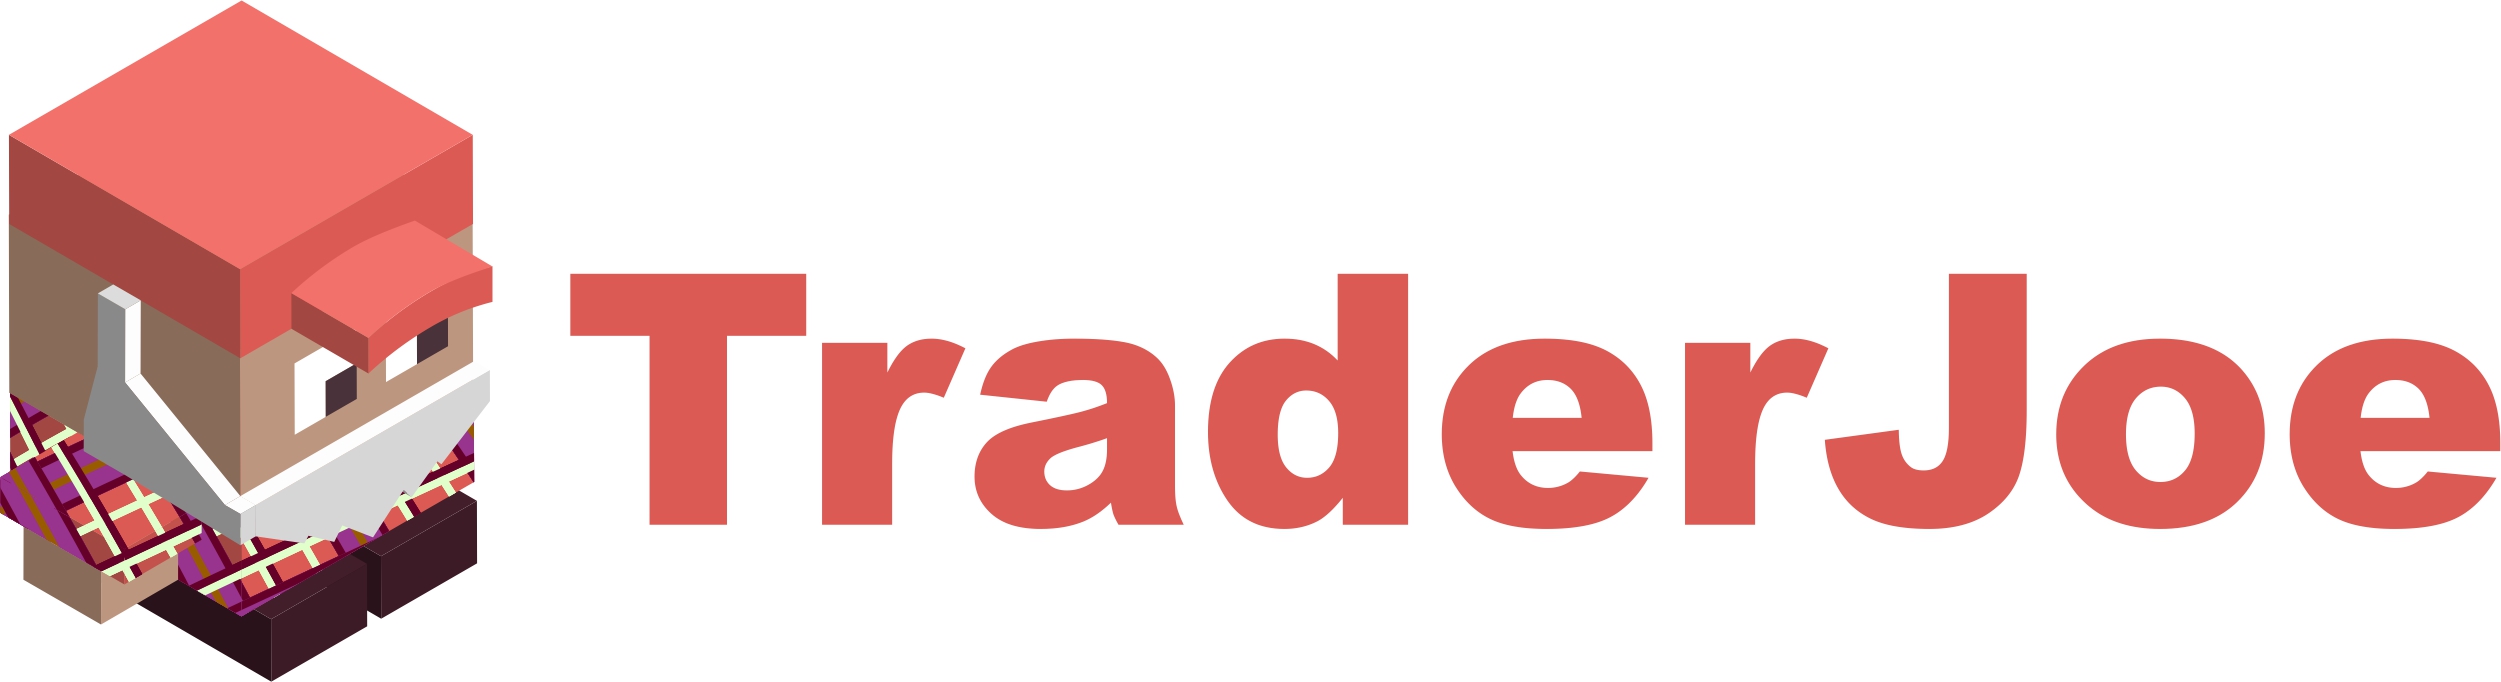 traderjoe logo